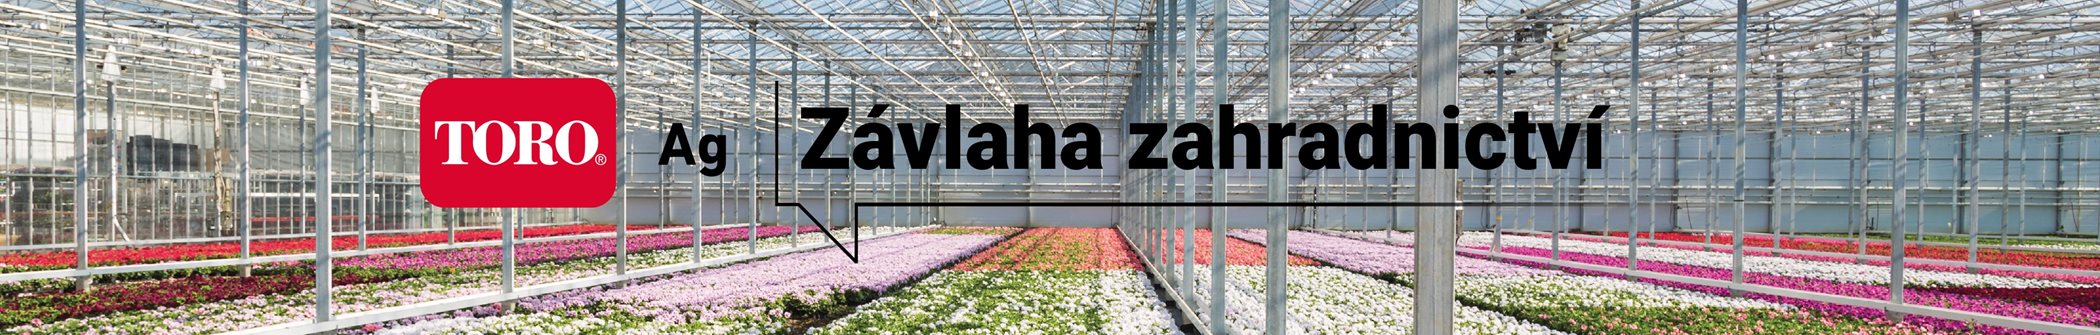 banner-zavlaha-zahradnictvi-2.jpg